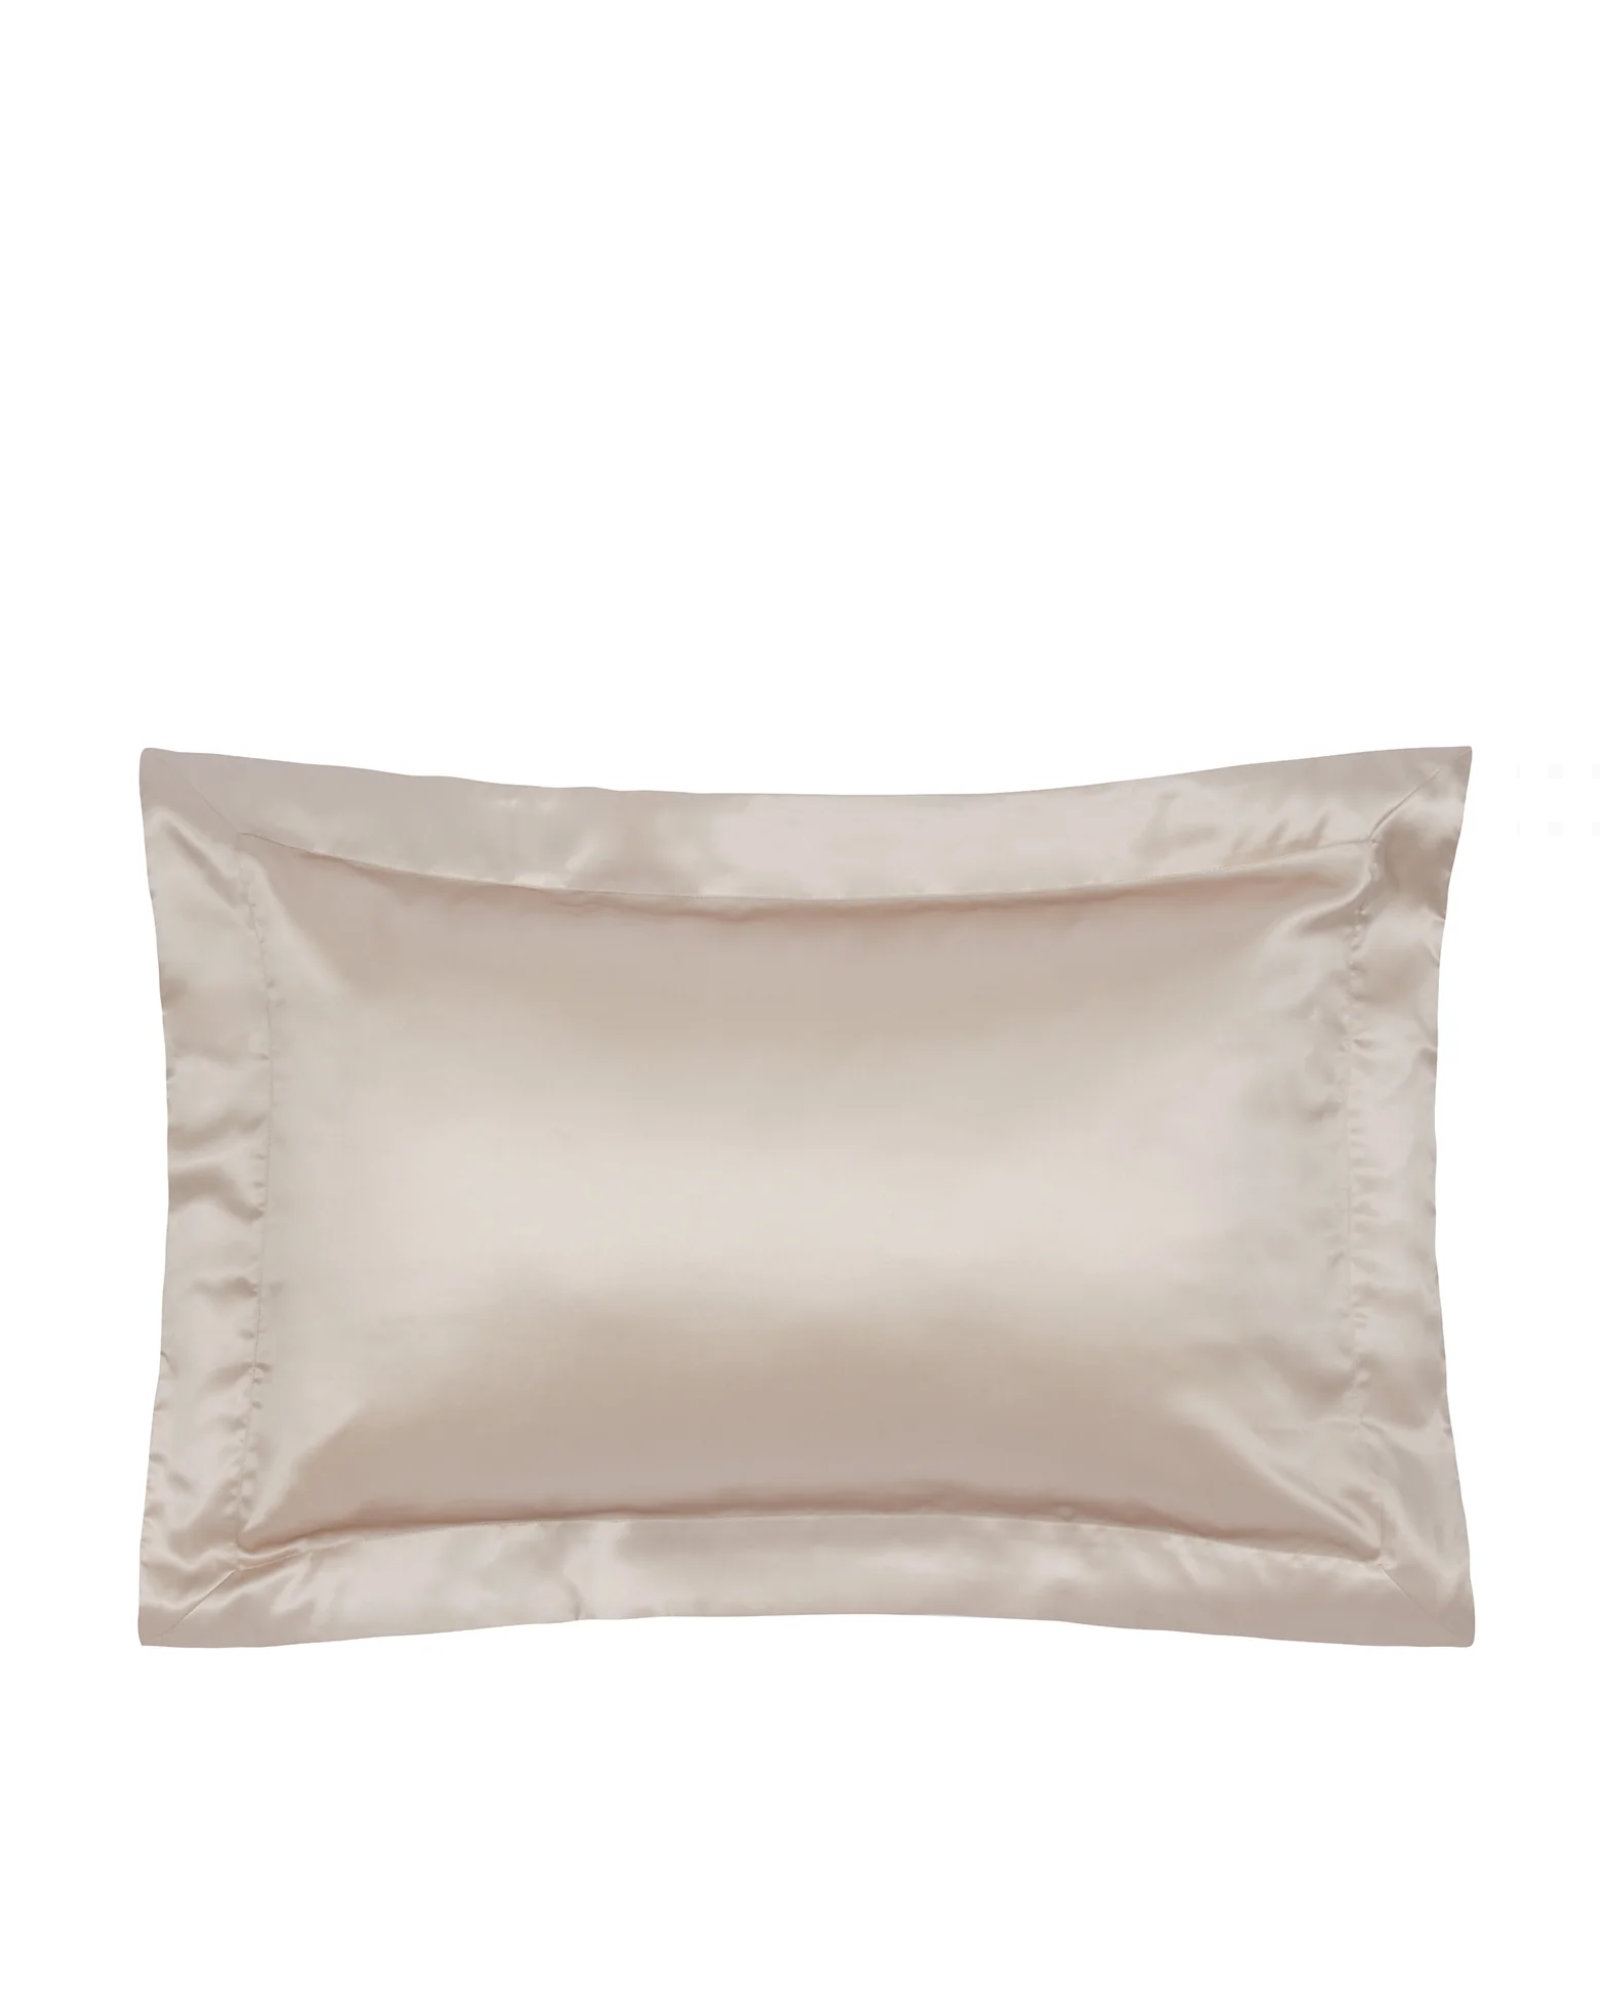 Gingerlily - Pillowcase SILK blush - 50x75 cm - blush